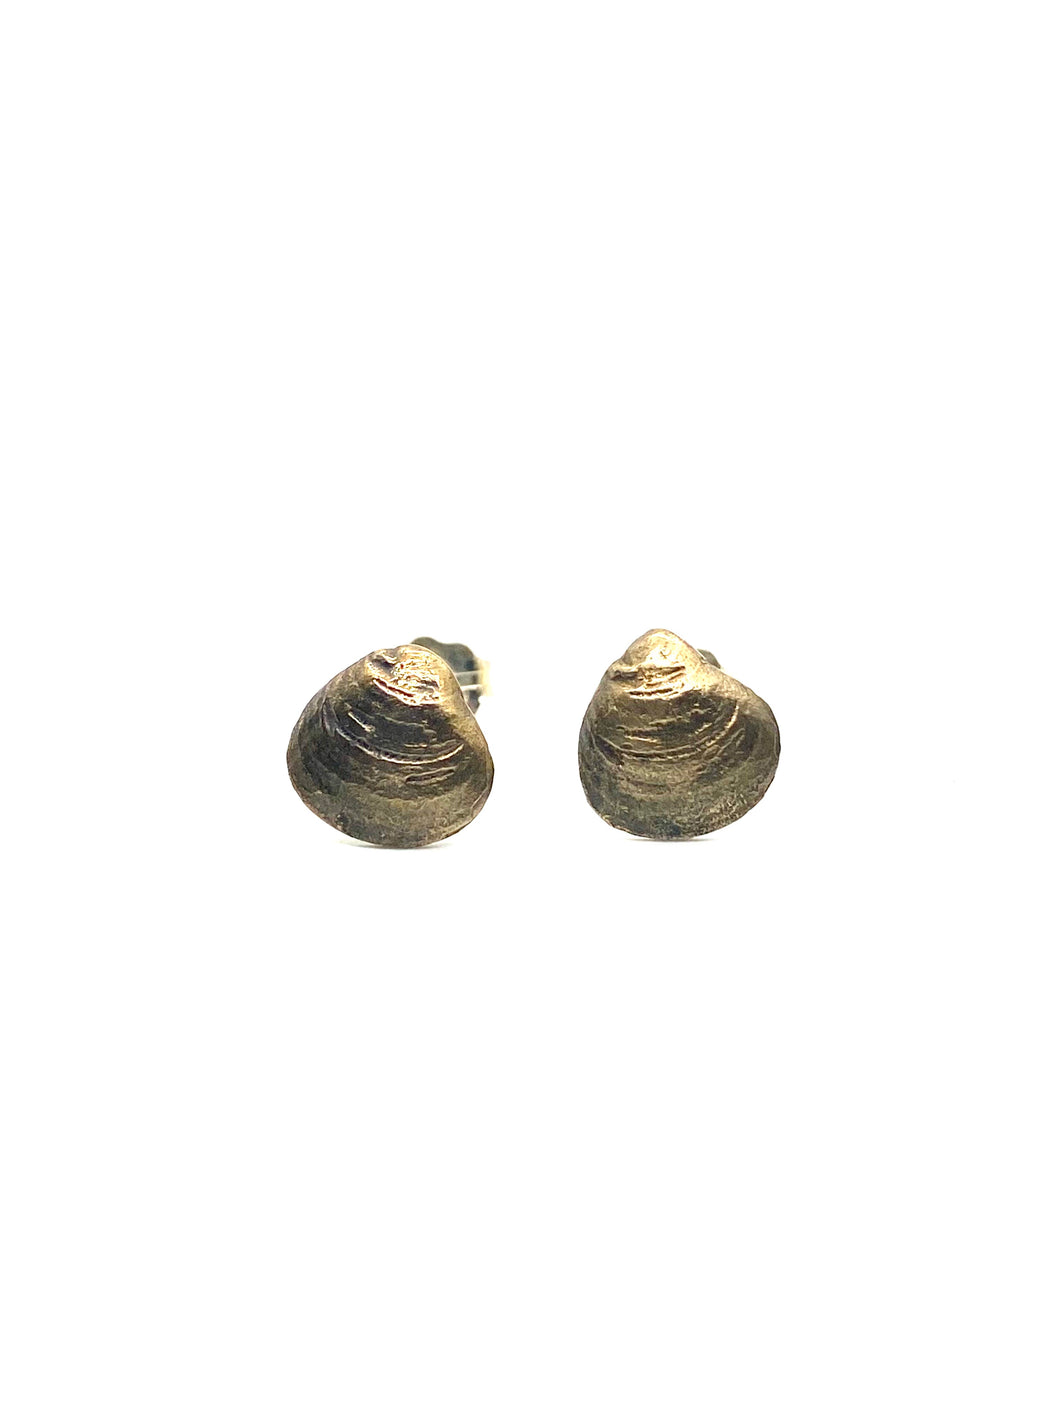 Small Cast Bronze Clam Shell Studs